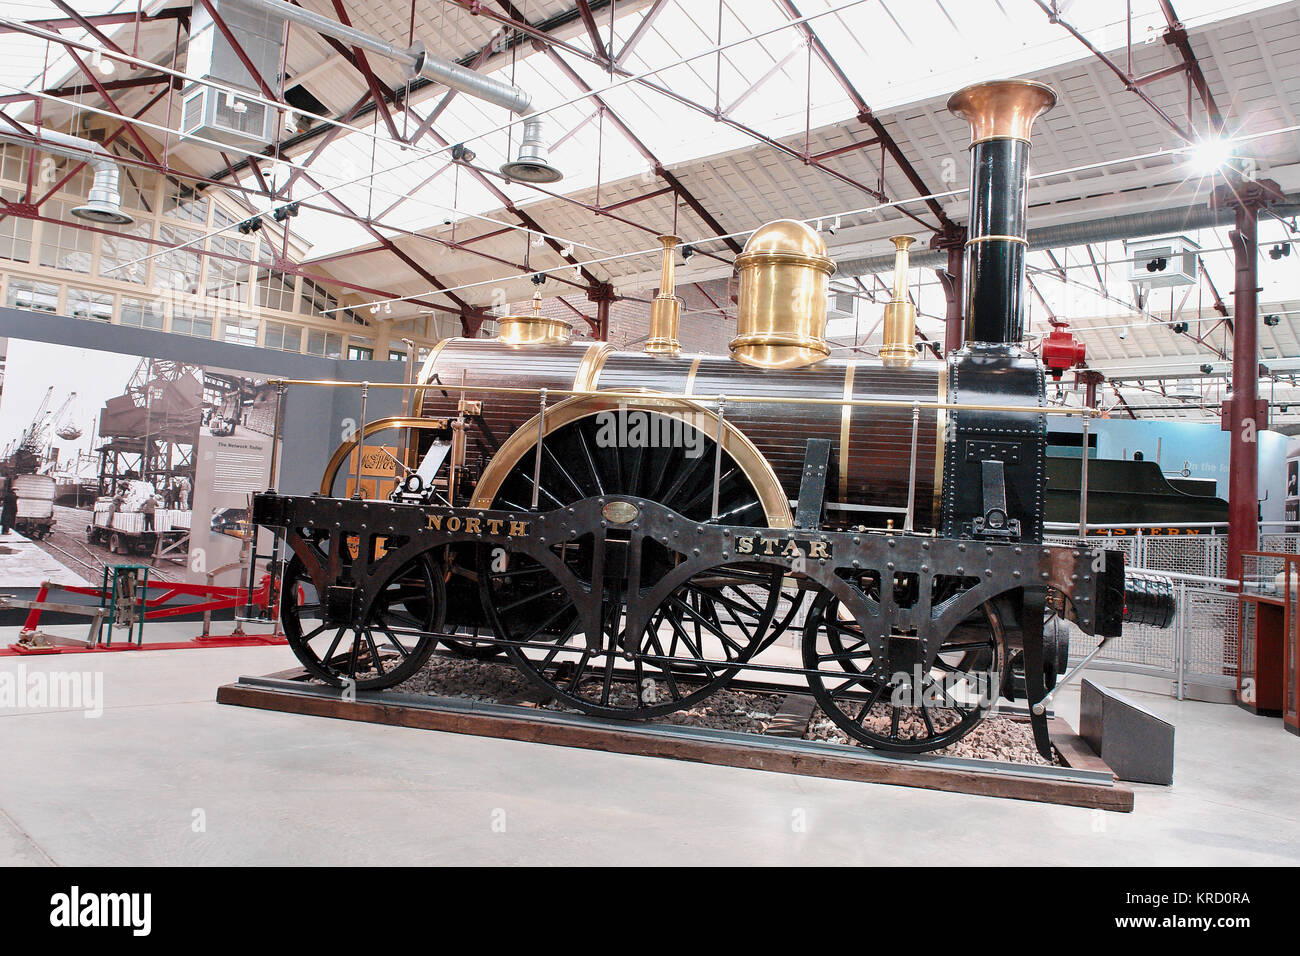 Una mostra incentrata su Isambard Kingdom Brunel al Swindon Steam Railway Museum. La North Star era una prima locomotiva. Foto Stock